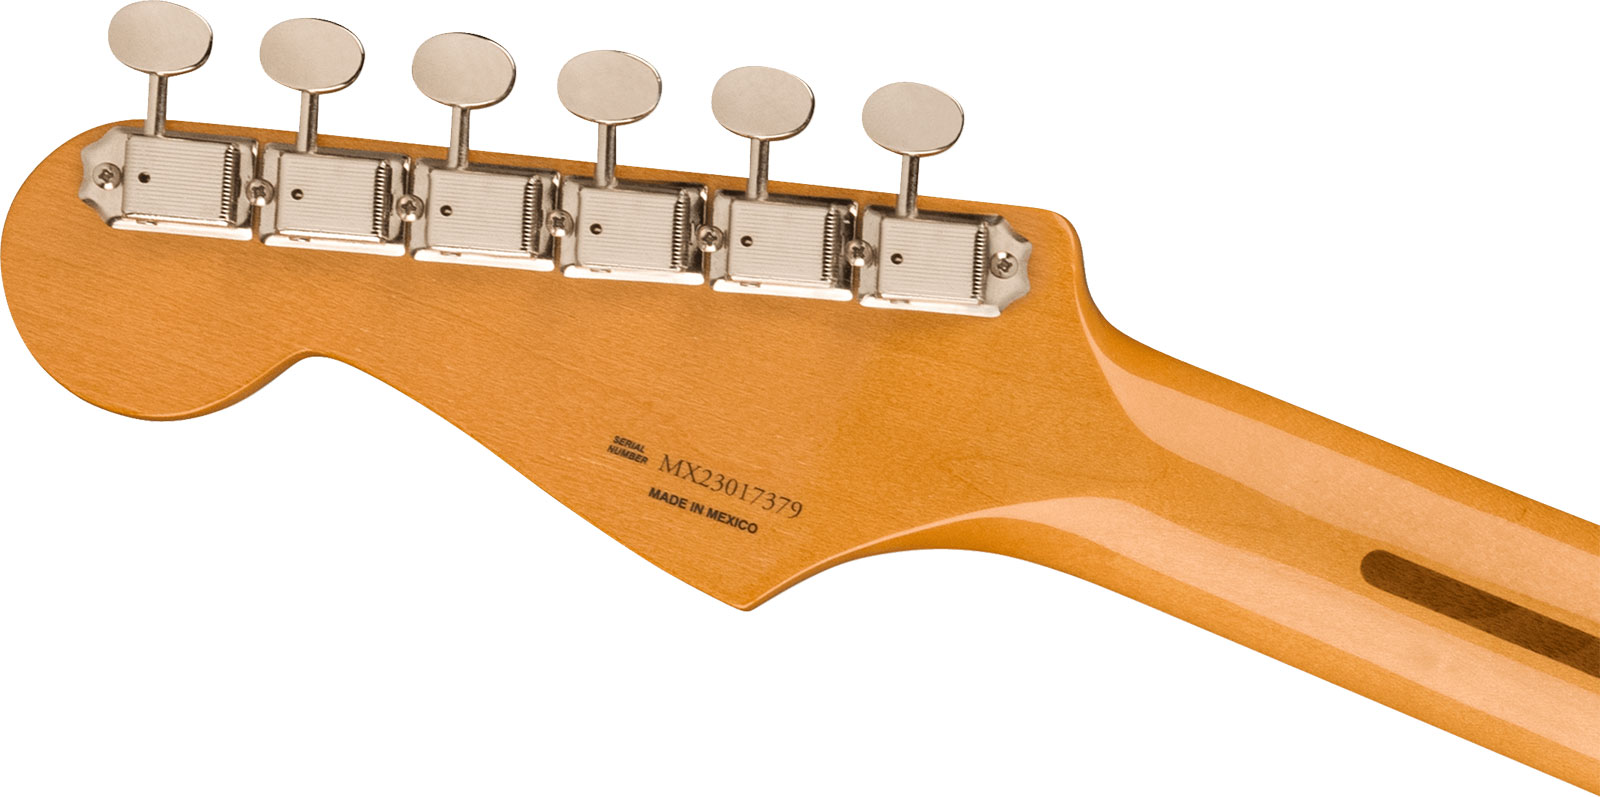 Fender Strat 50s Vintera 2 Mex 3s Trem Mn - 2-color Sunburst - Guitarra eléctrica con forma de str. - Variation 3